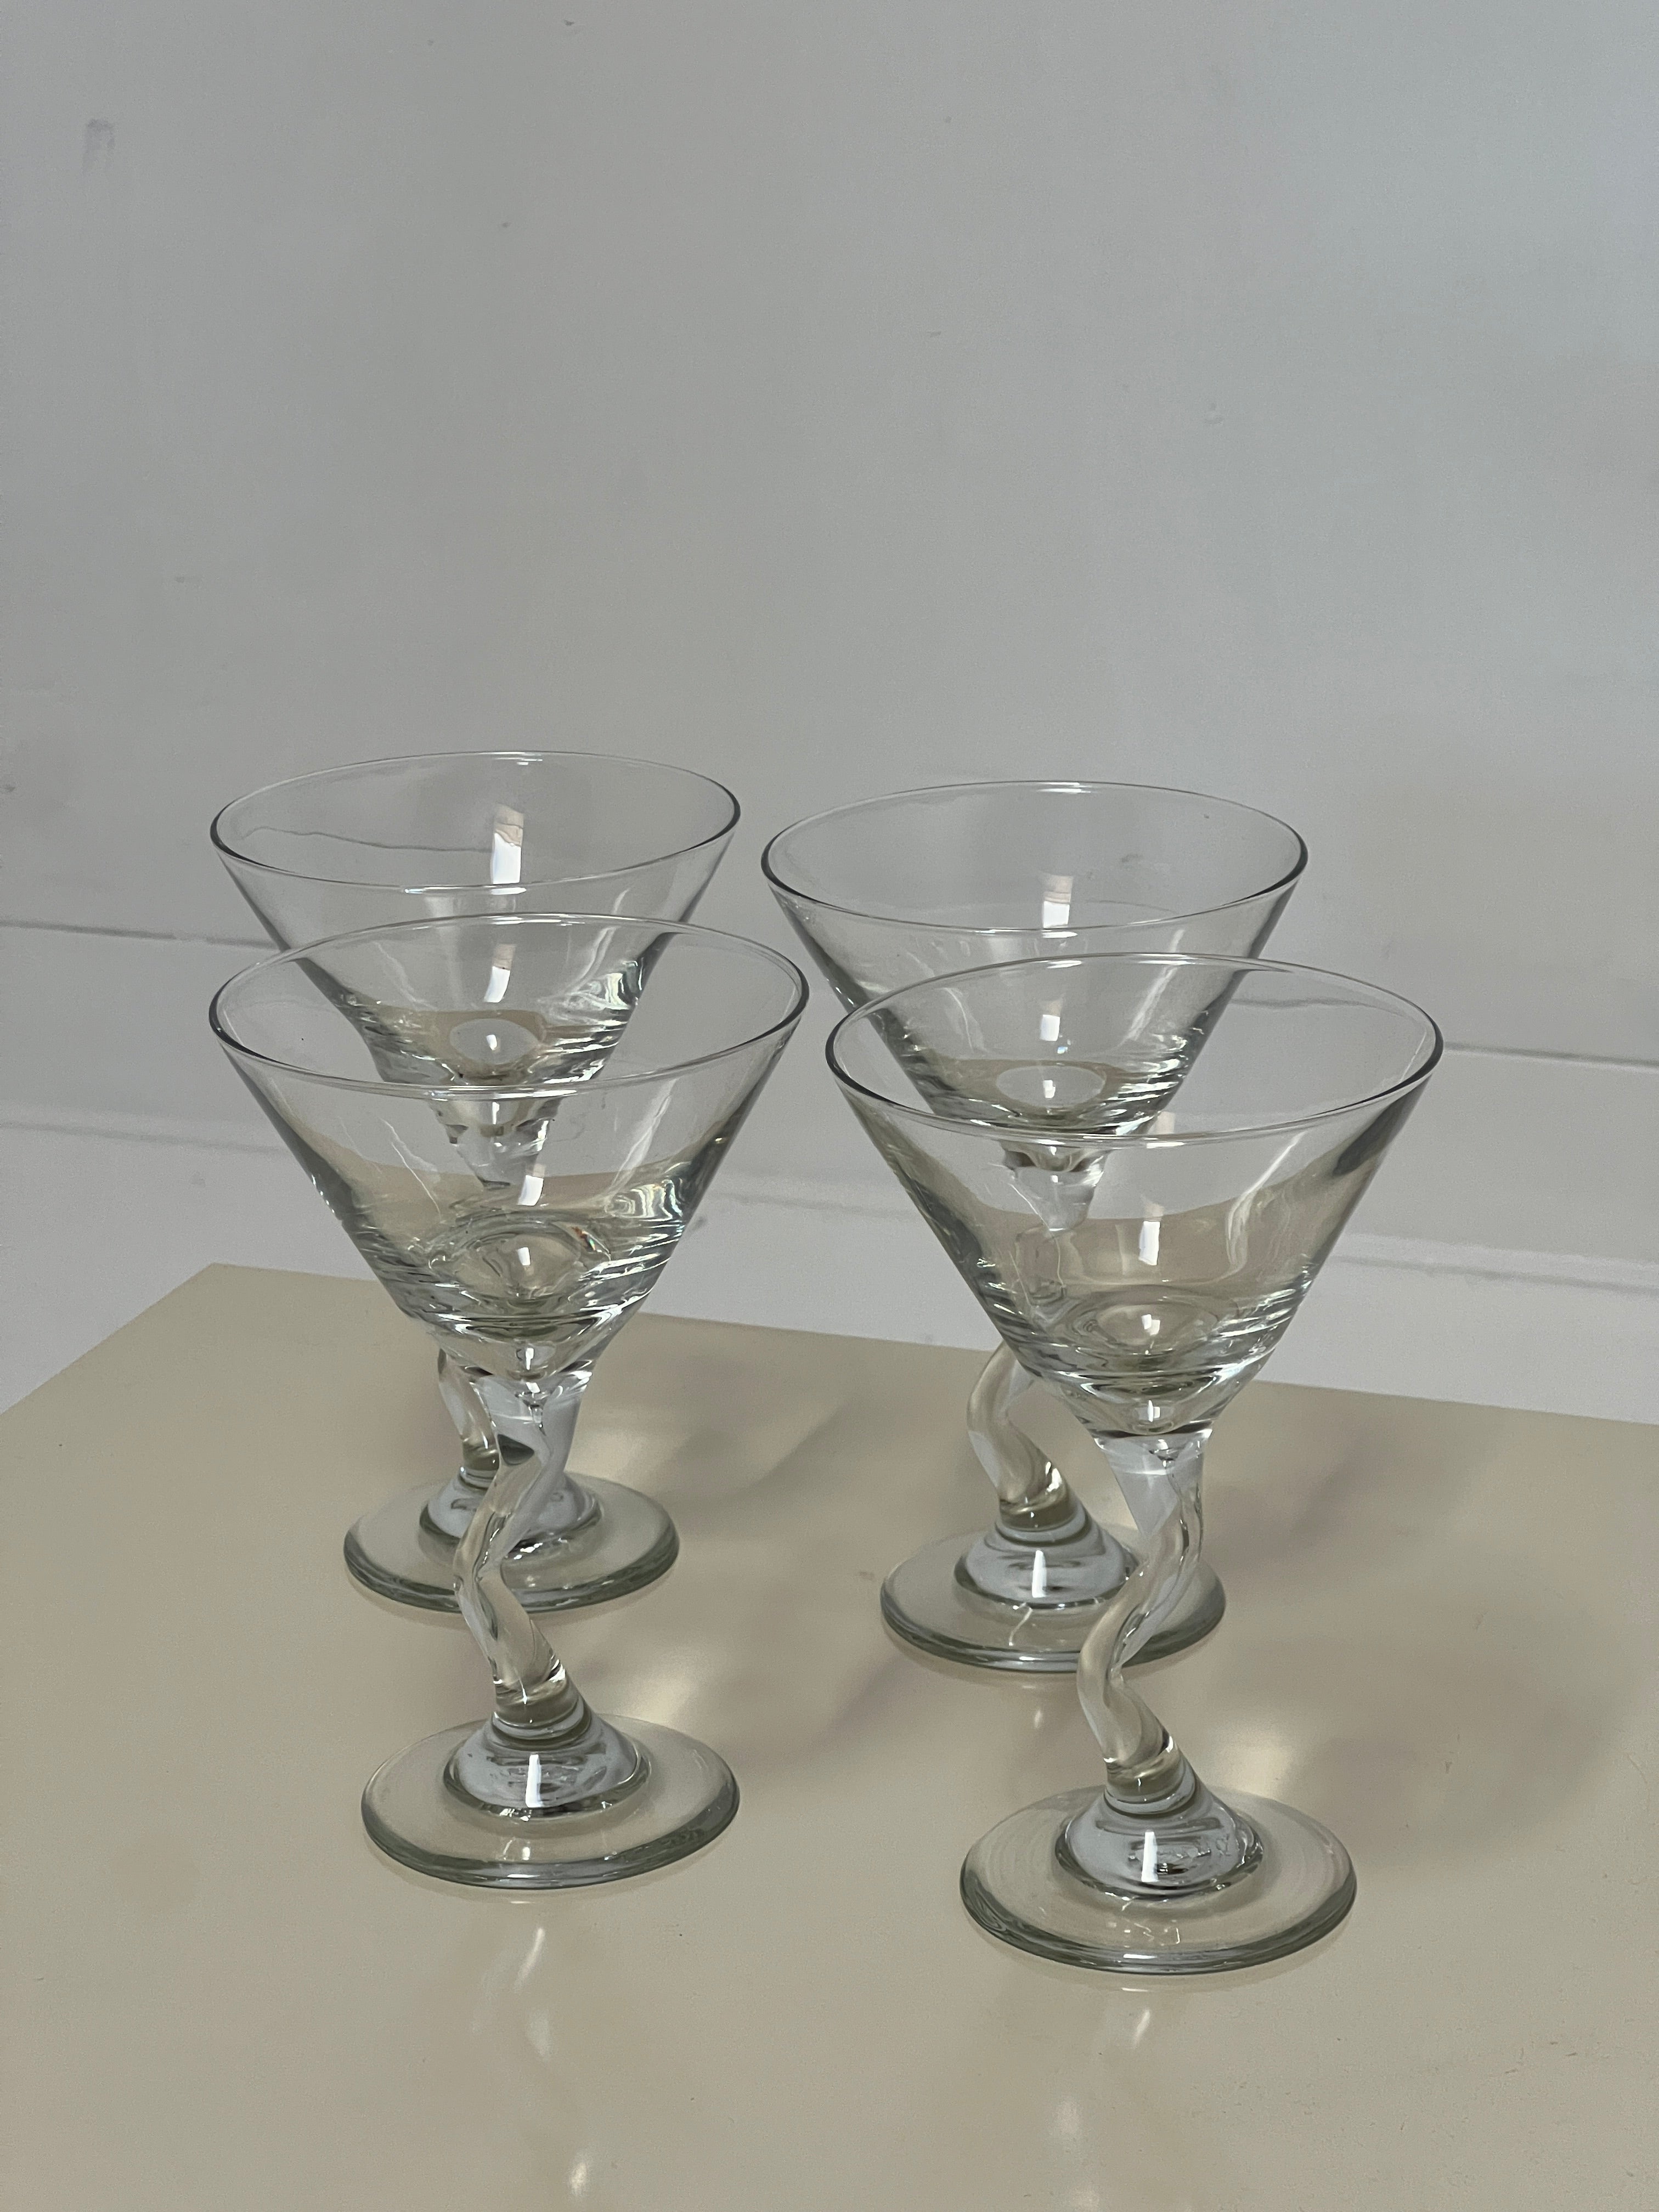 Squiggle Martini Glass Set